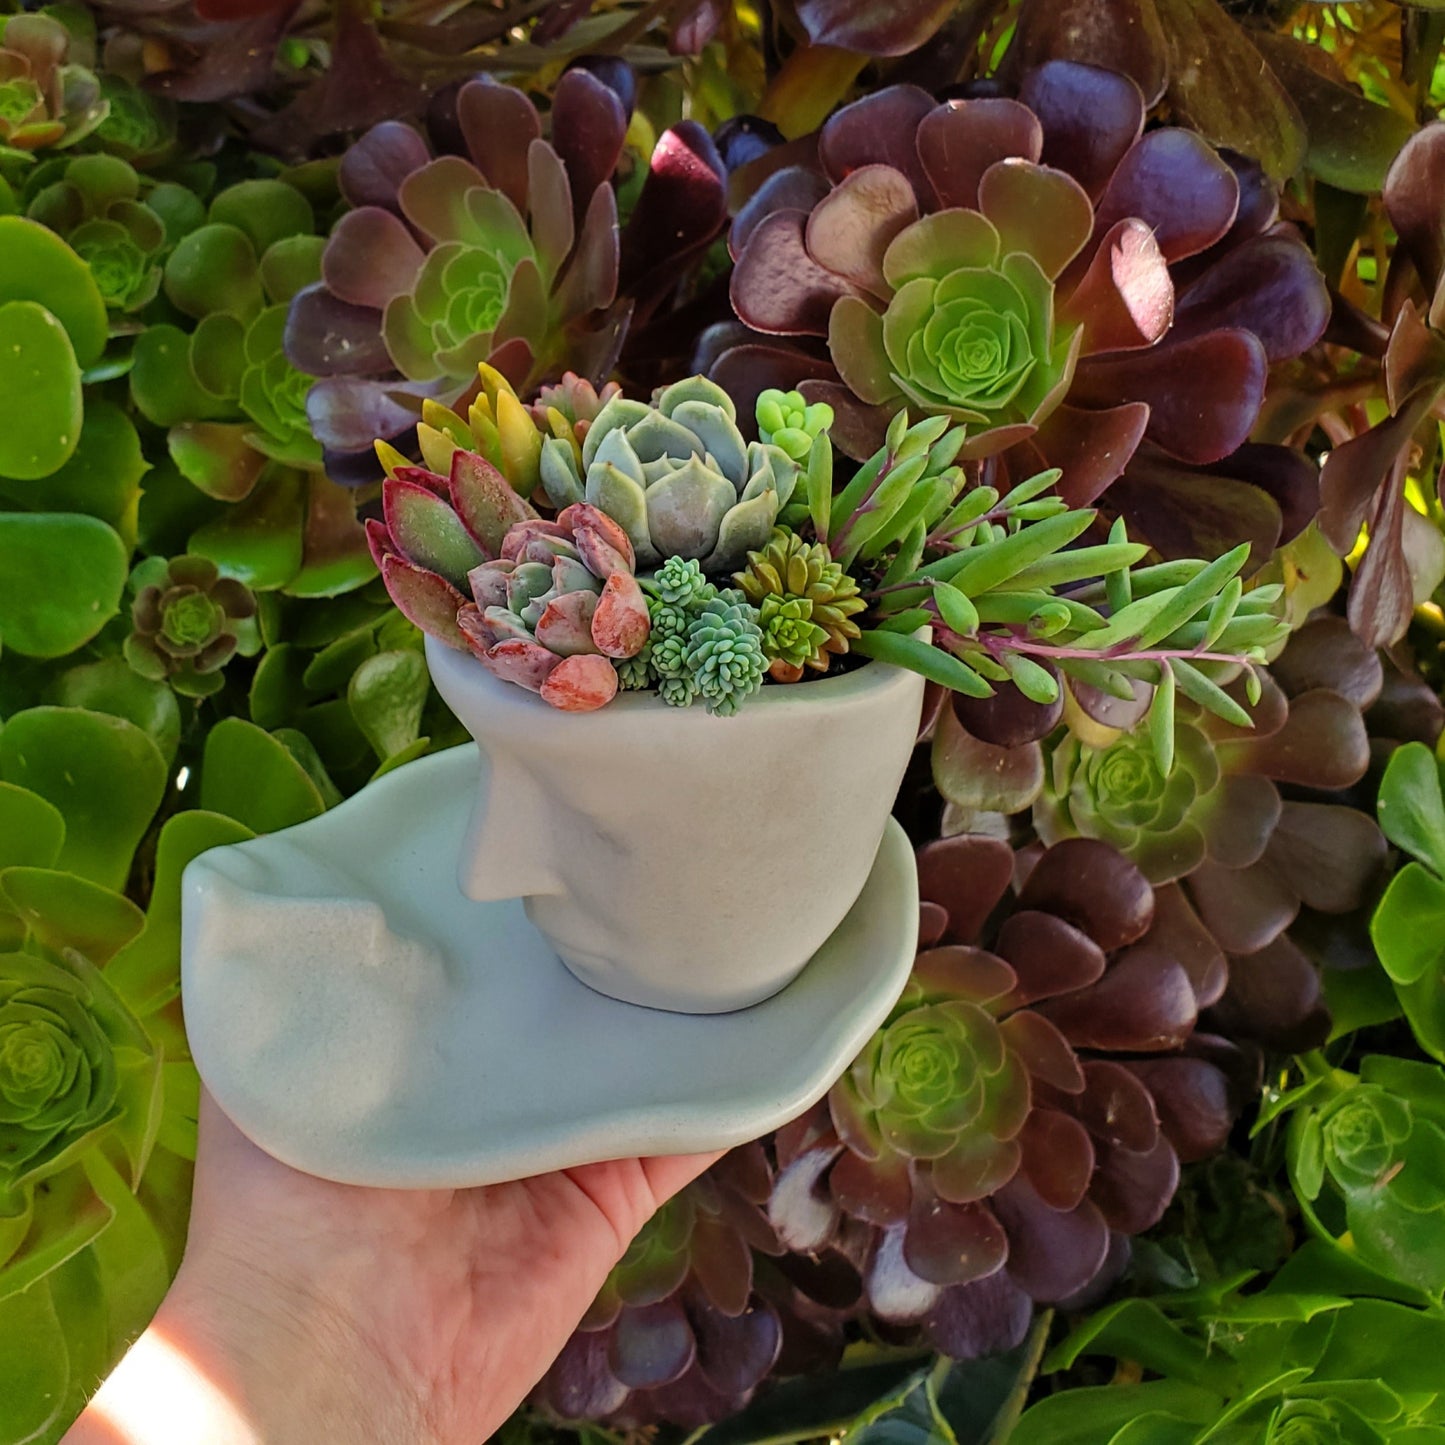 Succulent Face Teacup and Saucer Arrangement